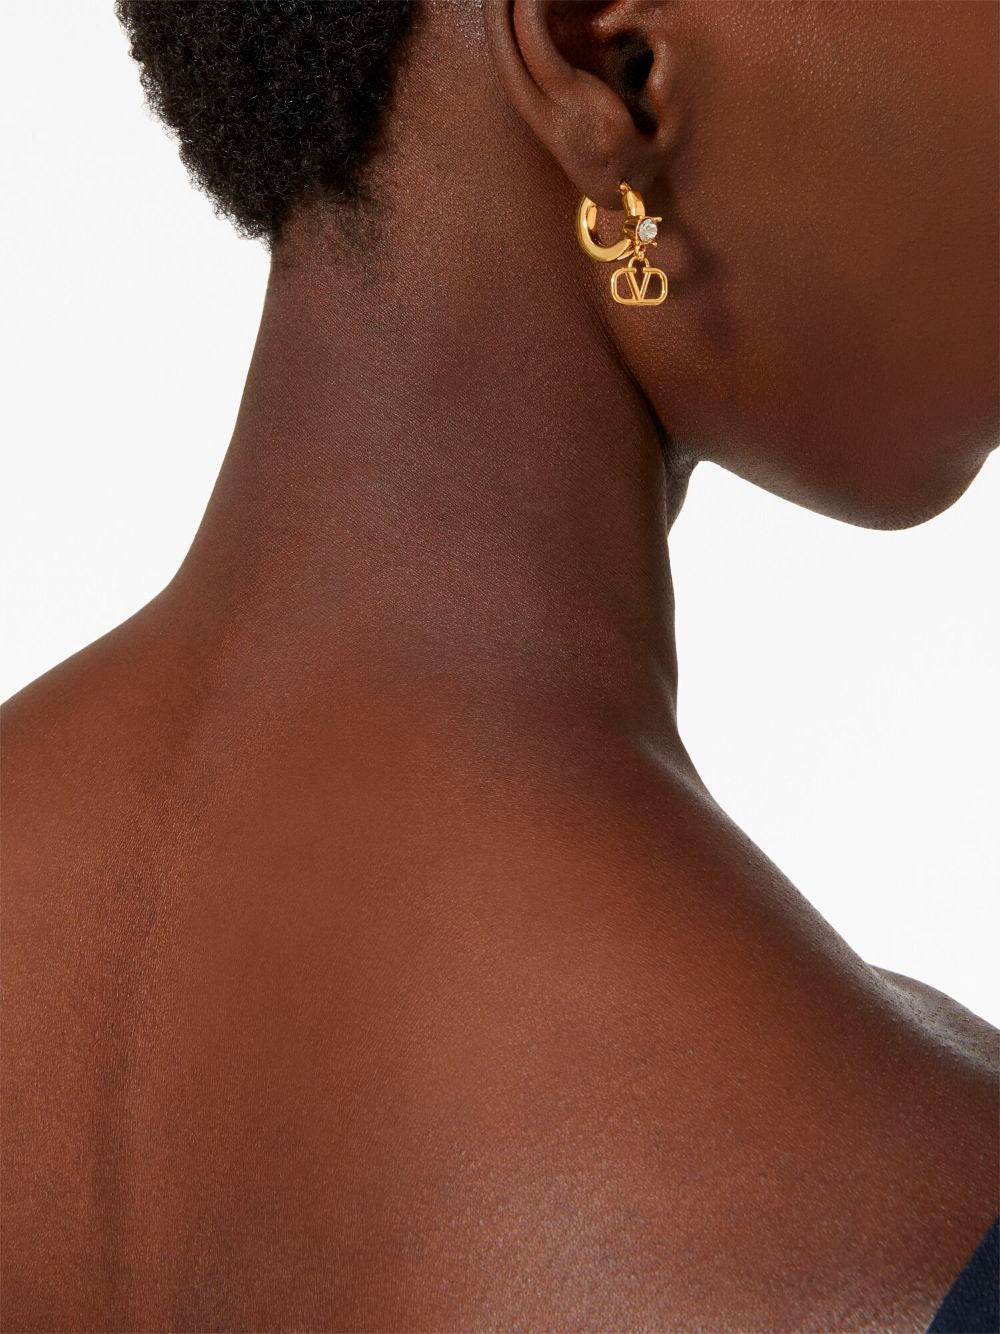 Vlogo Signature earrings